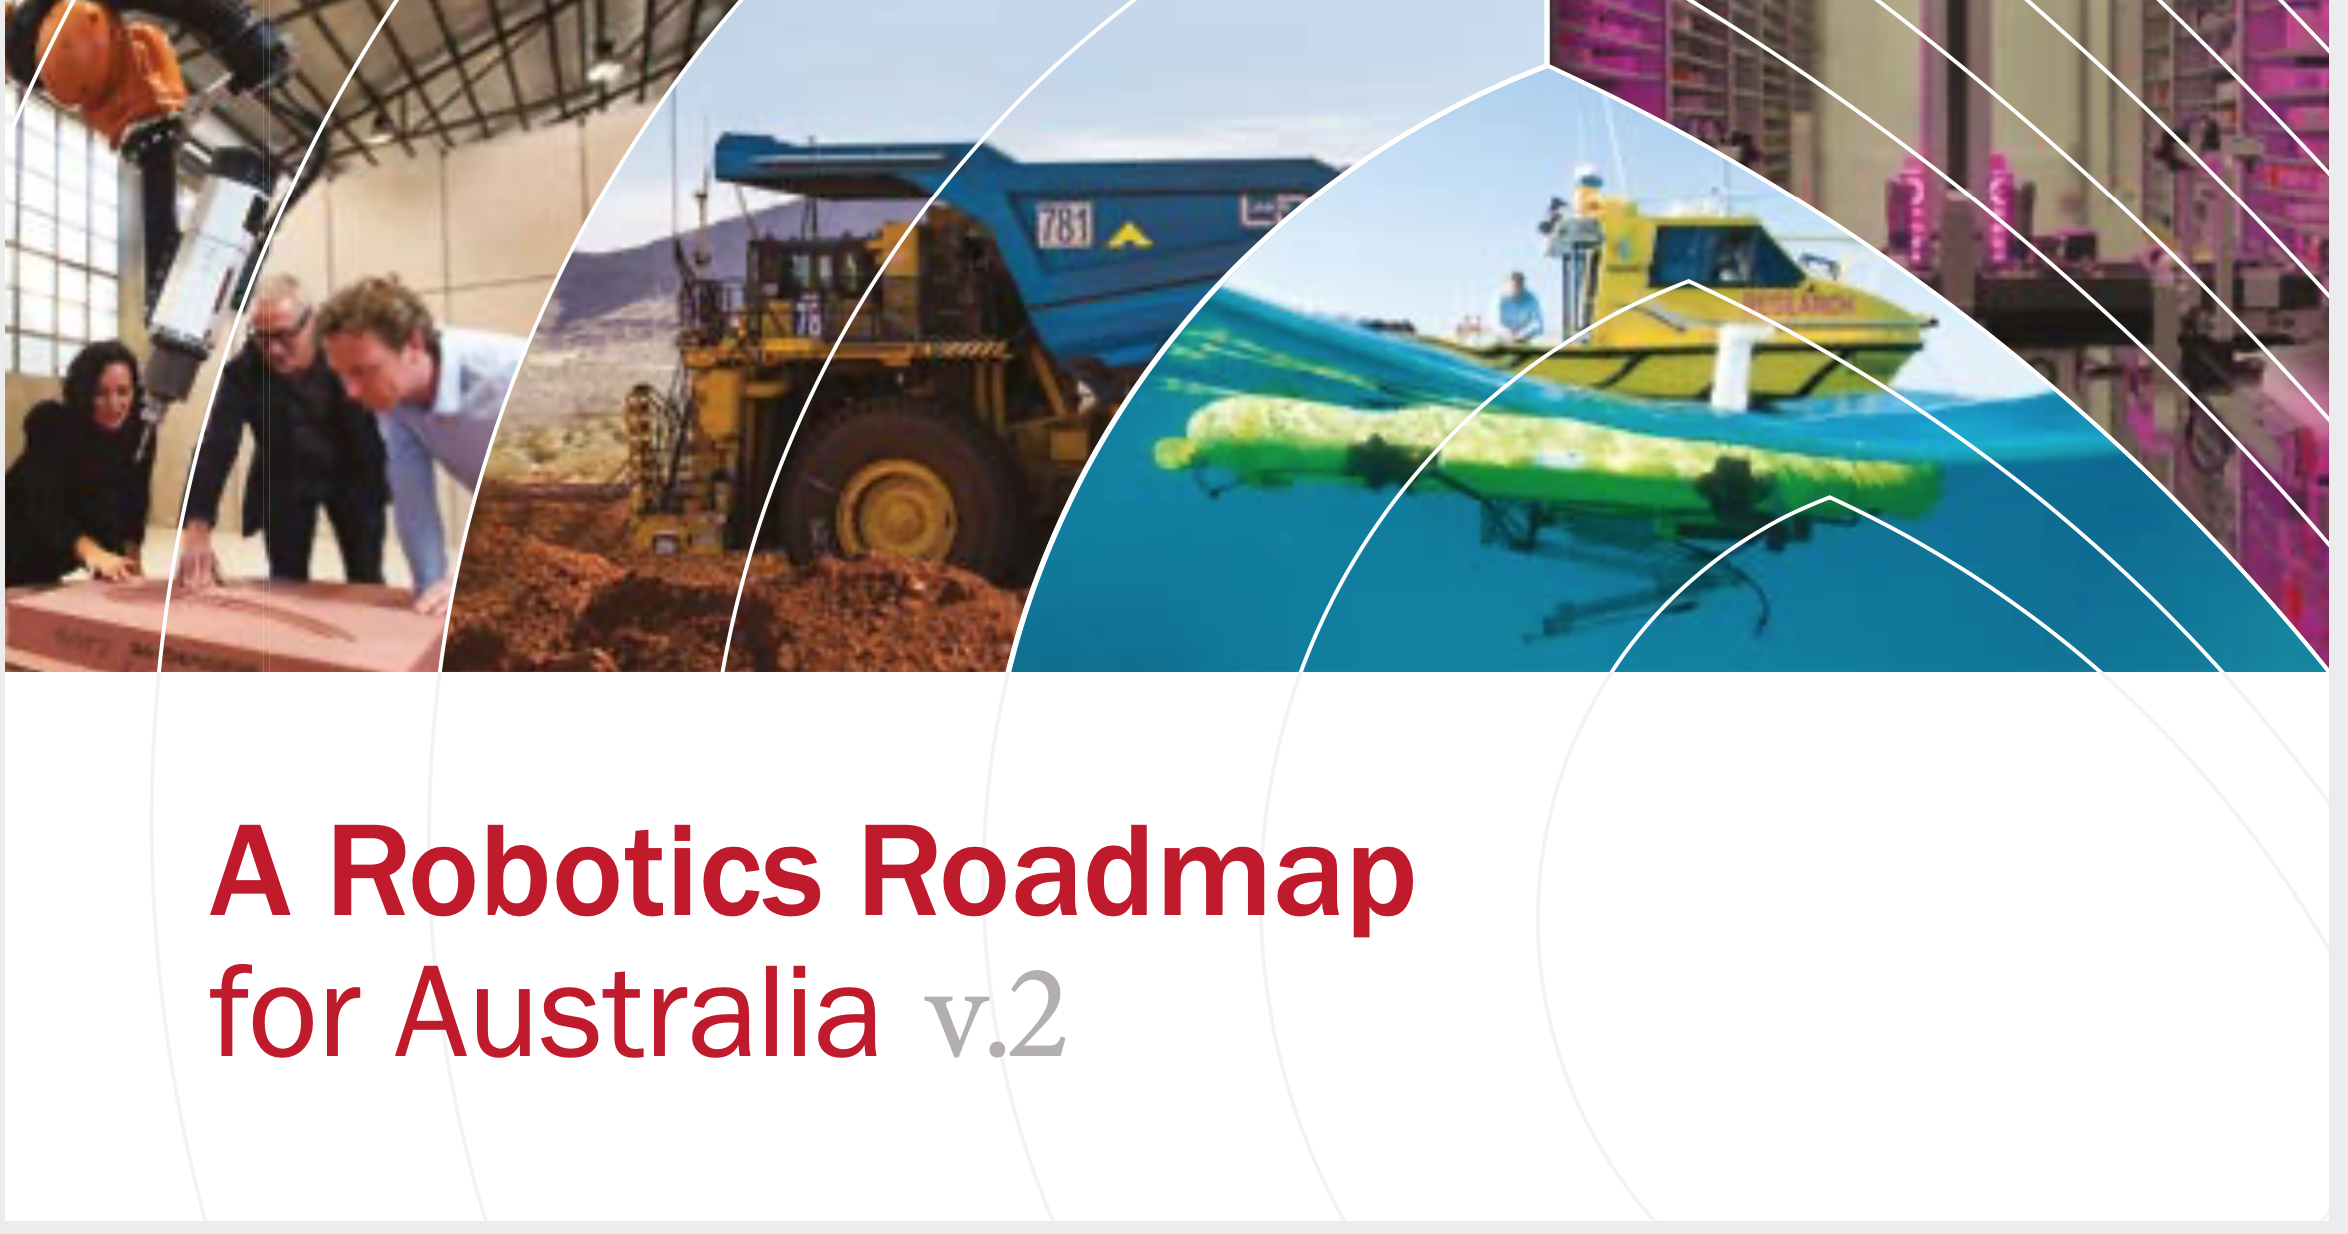 Invitation to the Services Workshop for the Australian Robotics Roadmap 2020